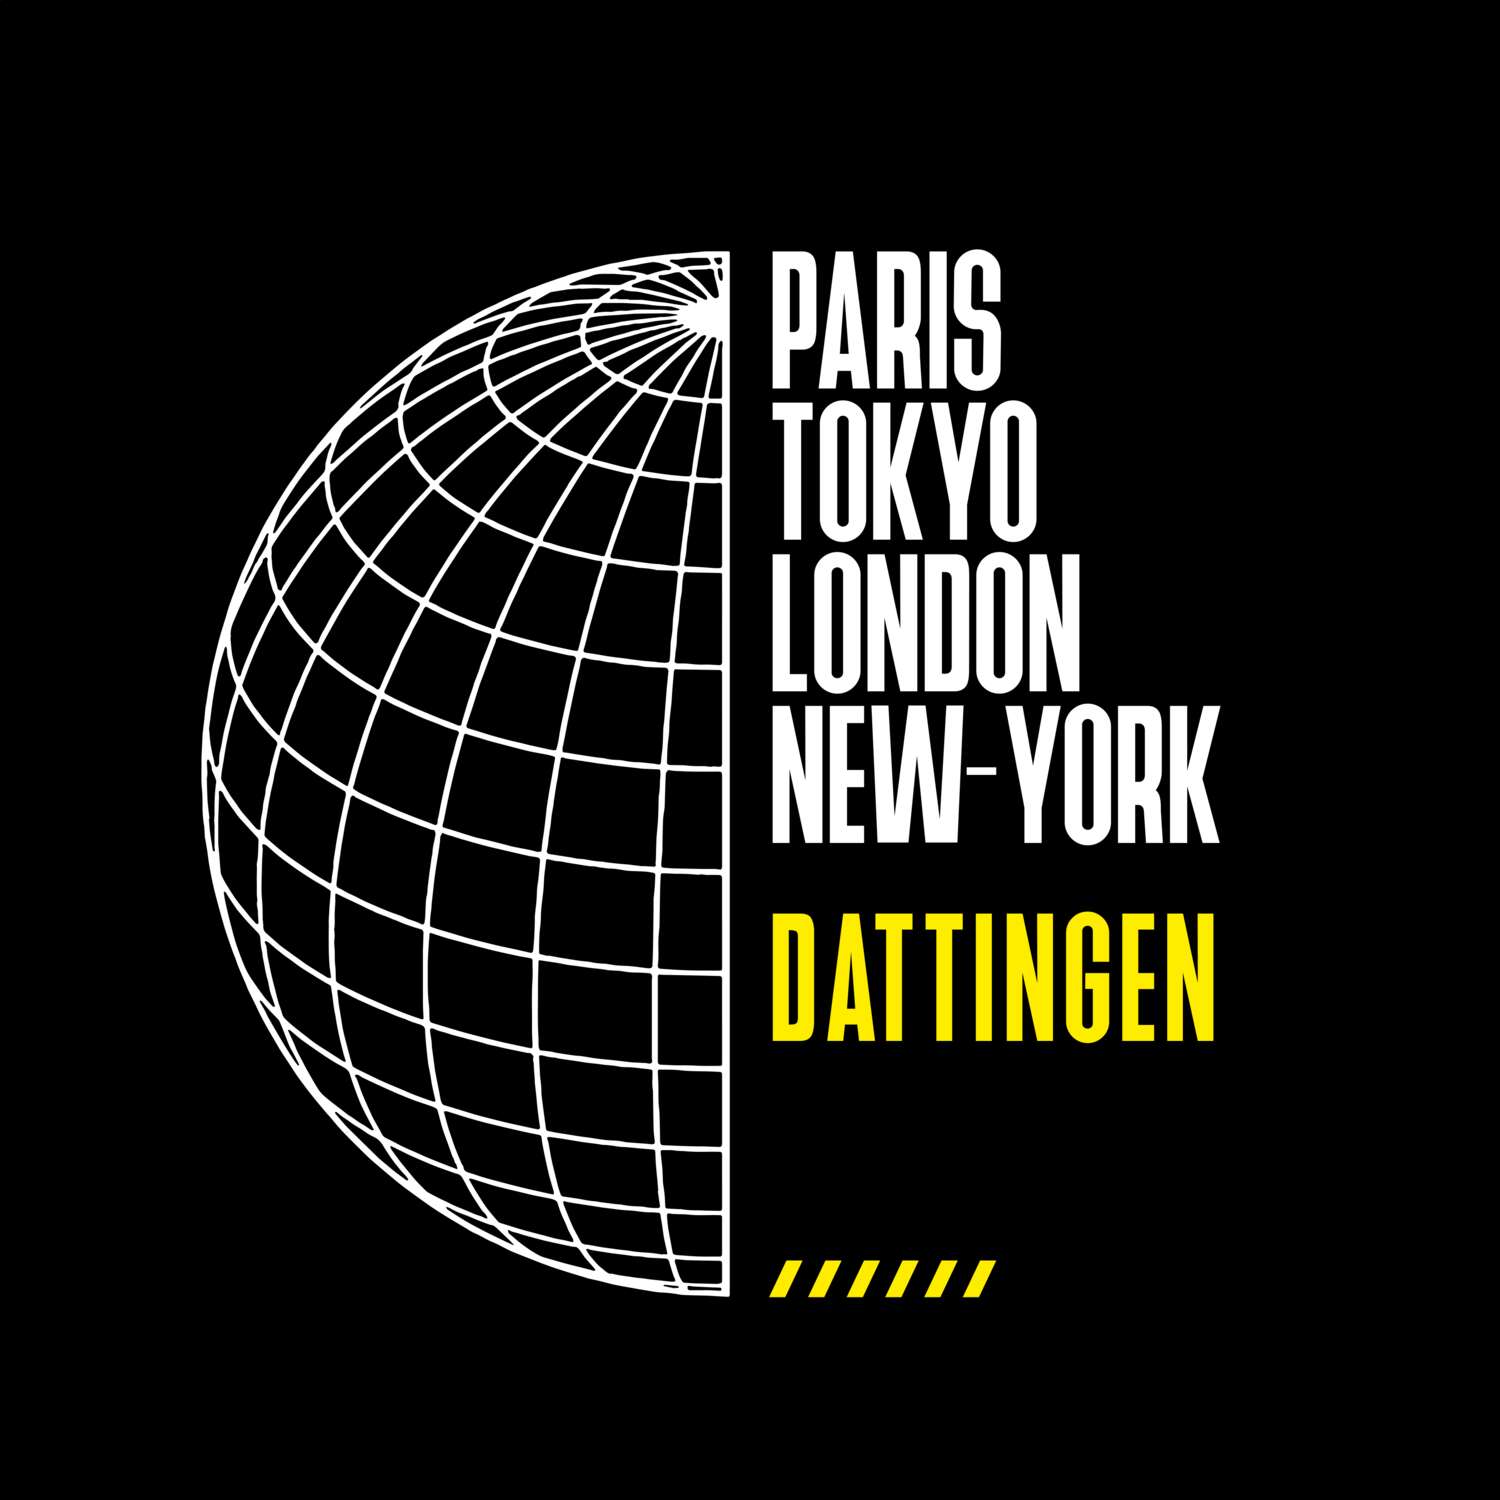 Dattingen T-Shirt »Paris Tokyo London«